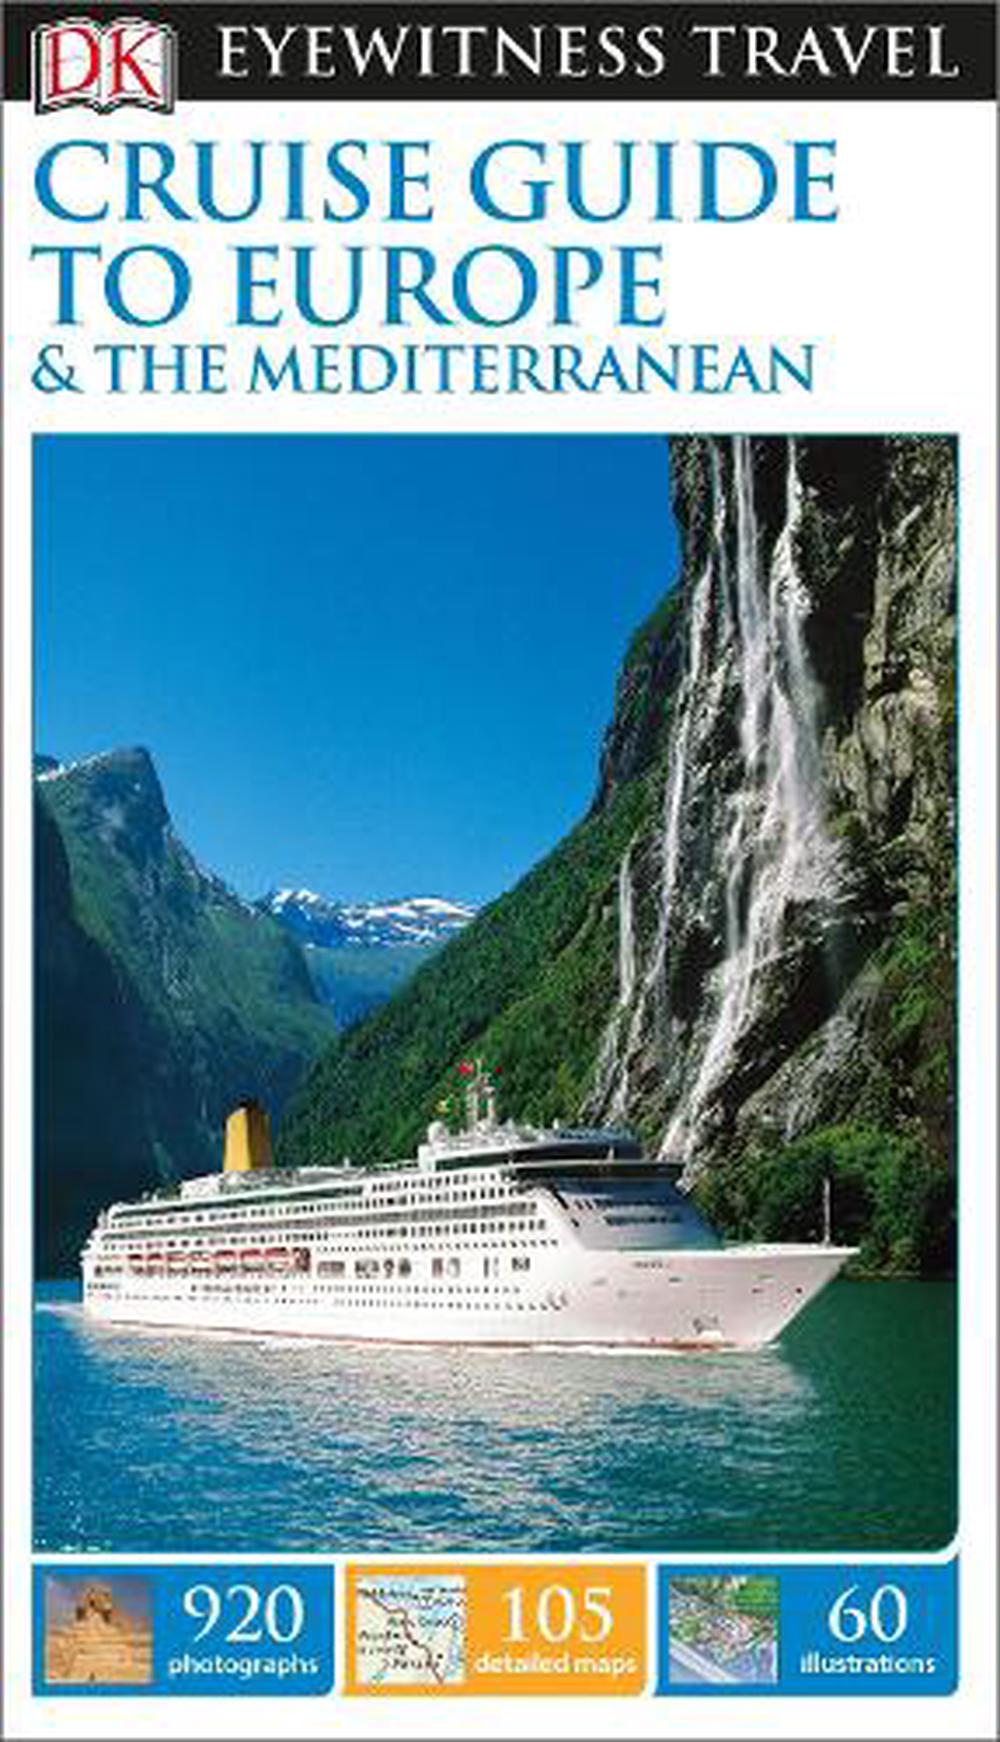 The　and　Paperback,　at　DK　9781409370222　Europe　by　the　Eyewitness　Buy　online　Mediterranean　Cruise　Guide　Eyewitness,　to　DK　Nile